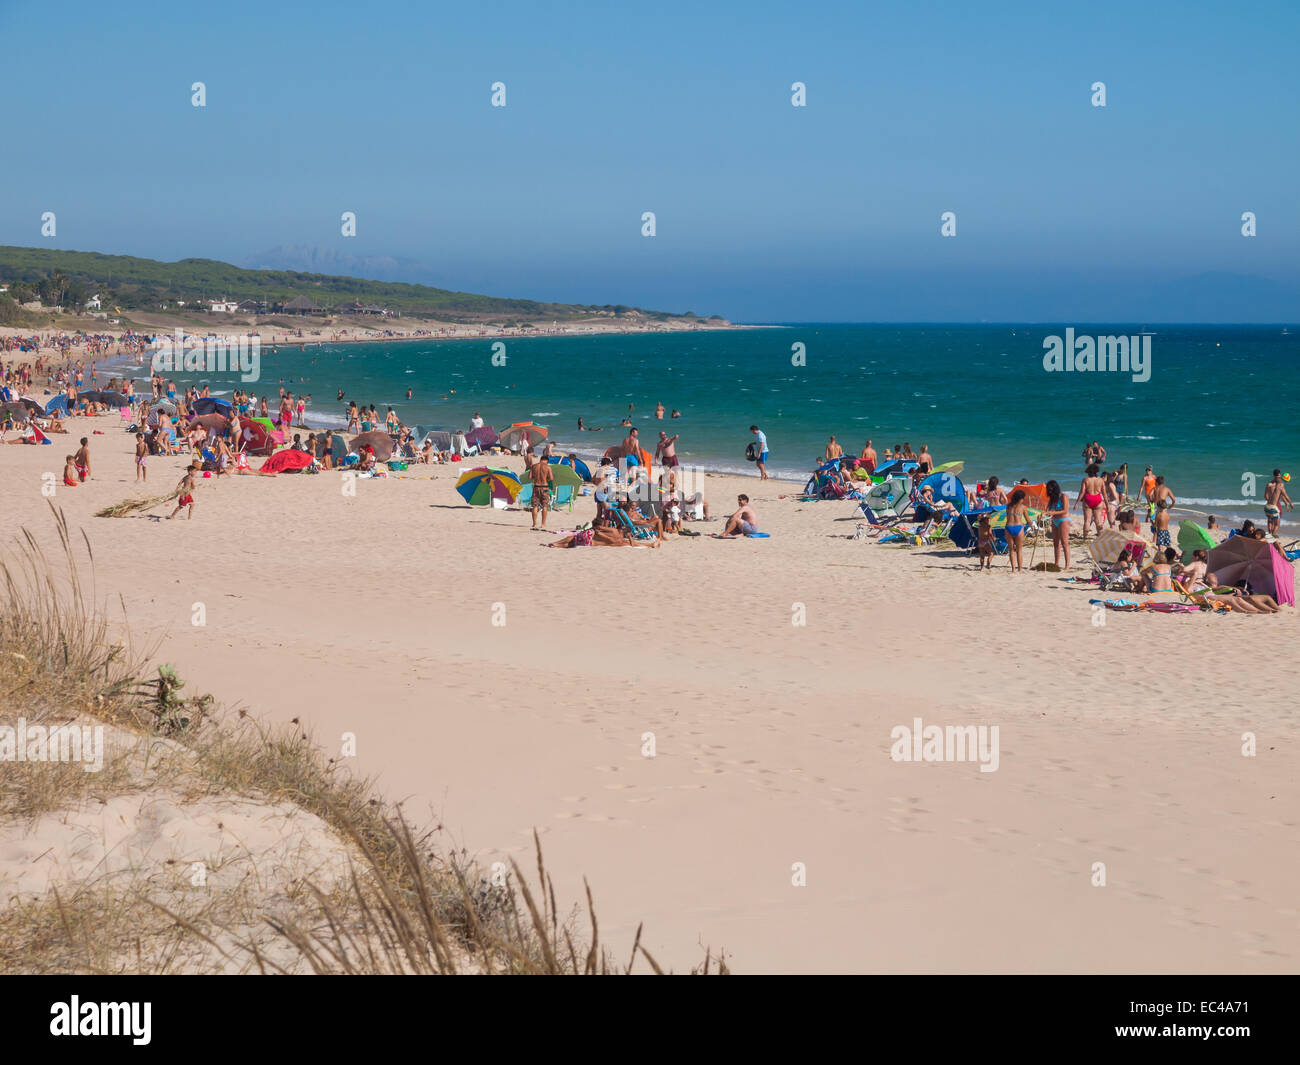 Beach of Bolonia, Costa de la Luz, with people sunbathing and enjoying their holidays Stock Photo